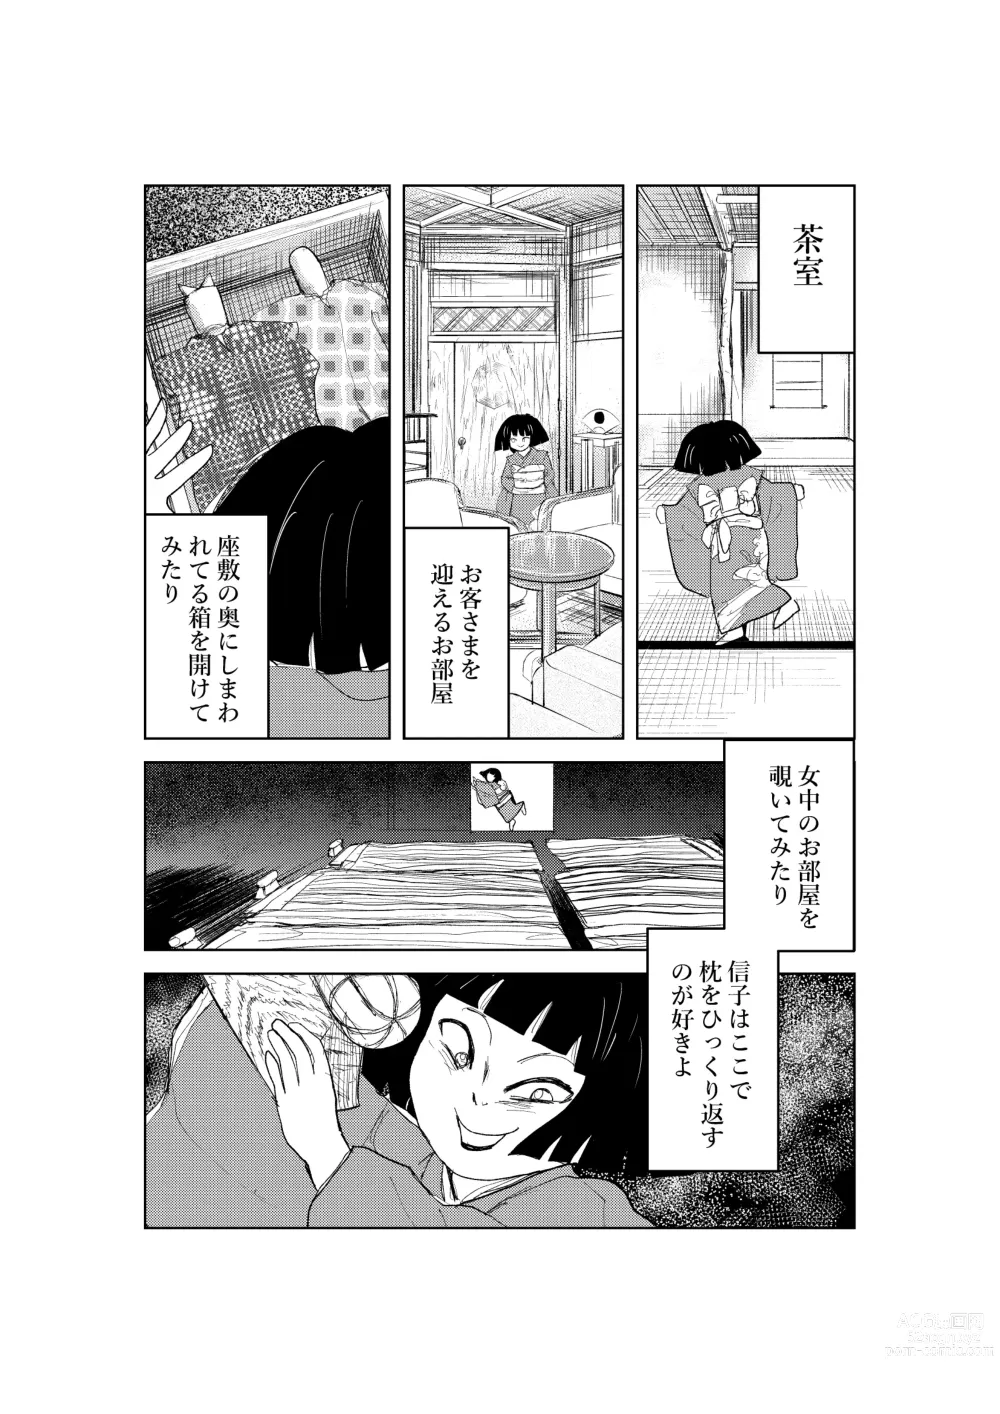 Page 5 of doujinshi Zashikiwarashi